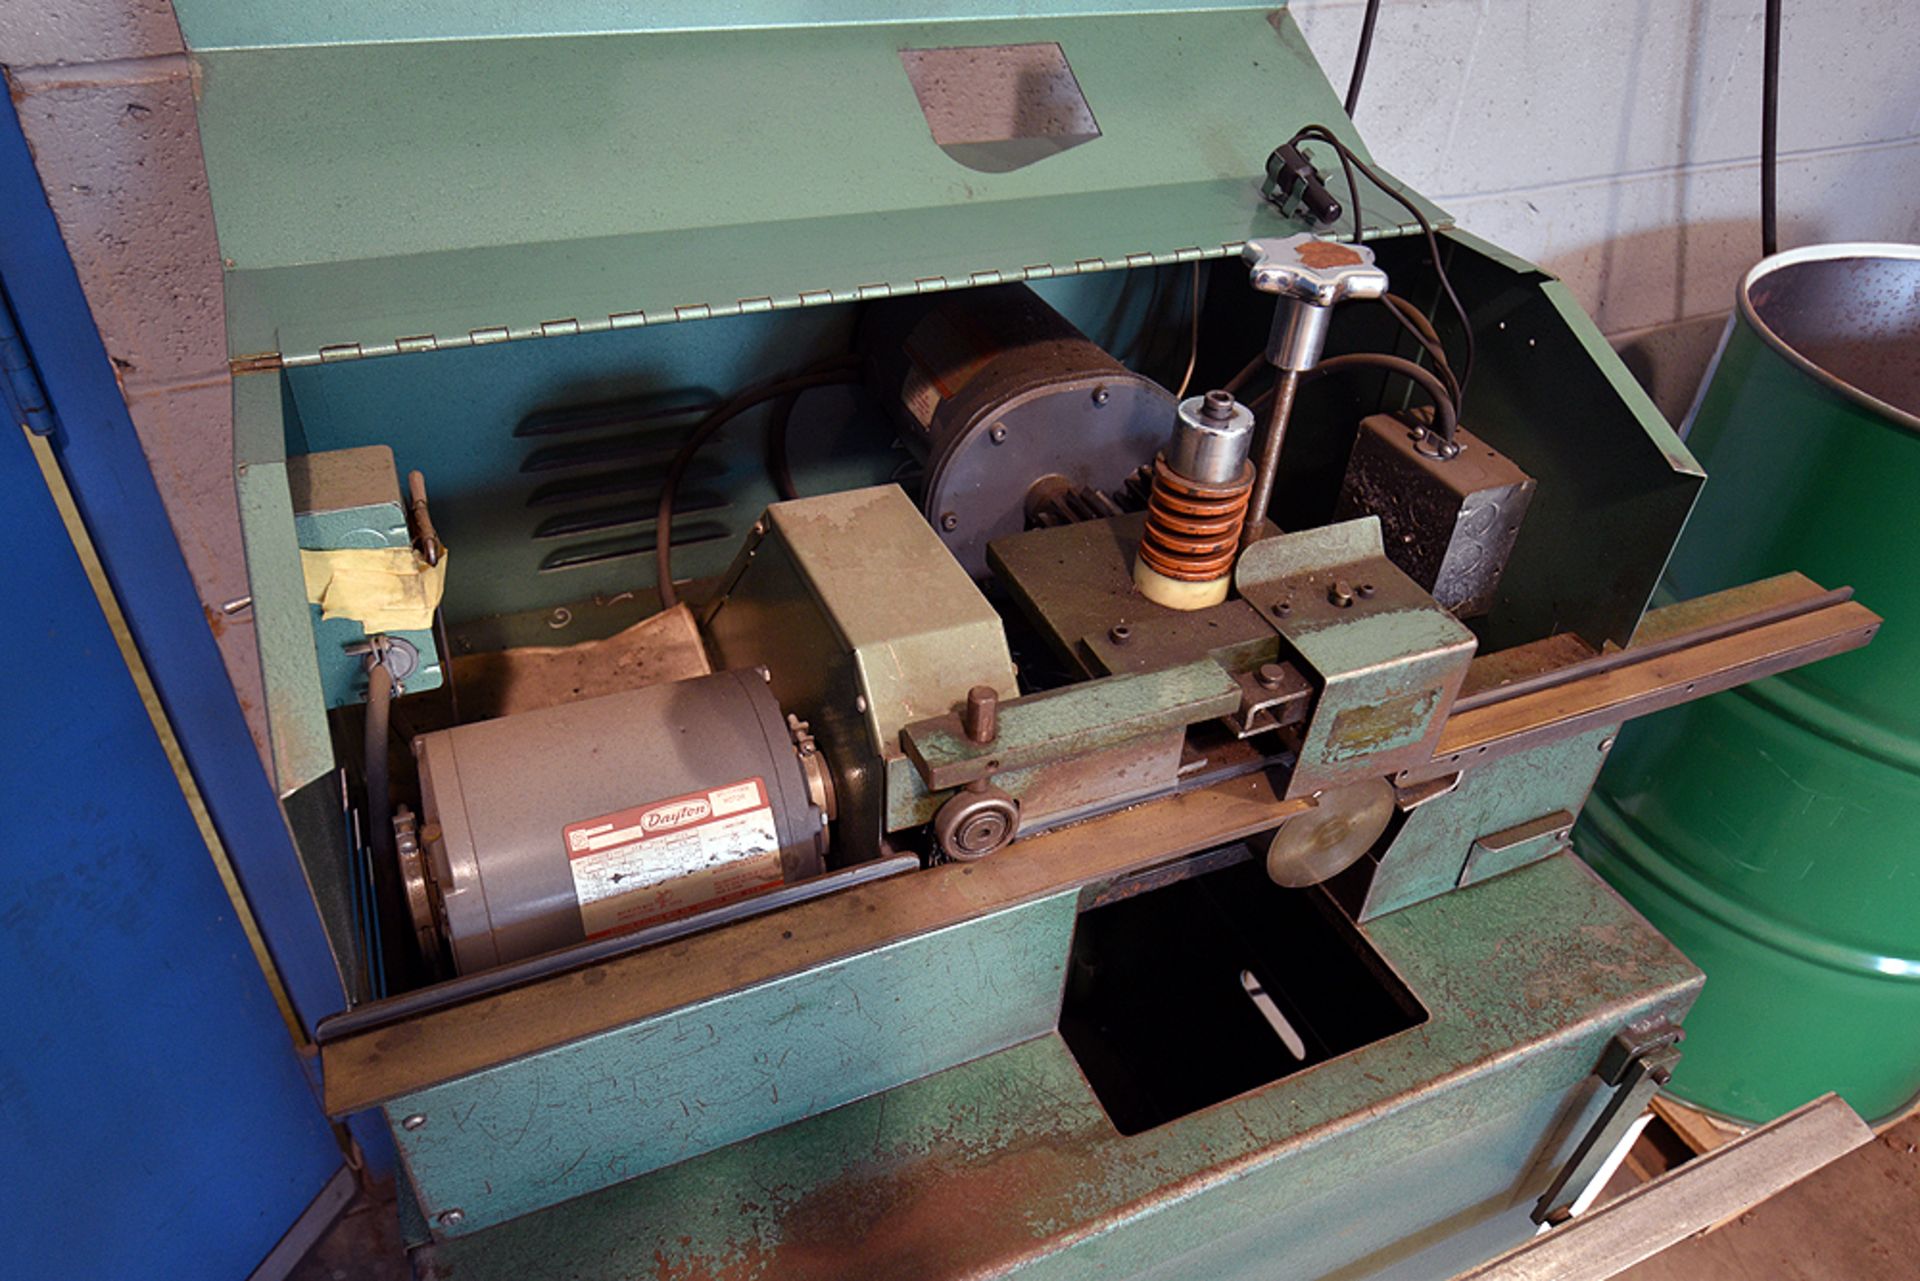 D-Bur-R deburring machine, 1/3 H.P., w/ casters - Image 3 of 4